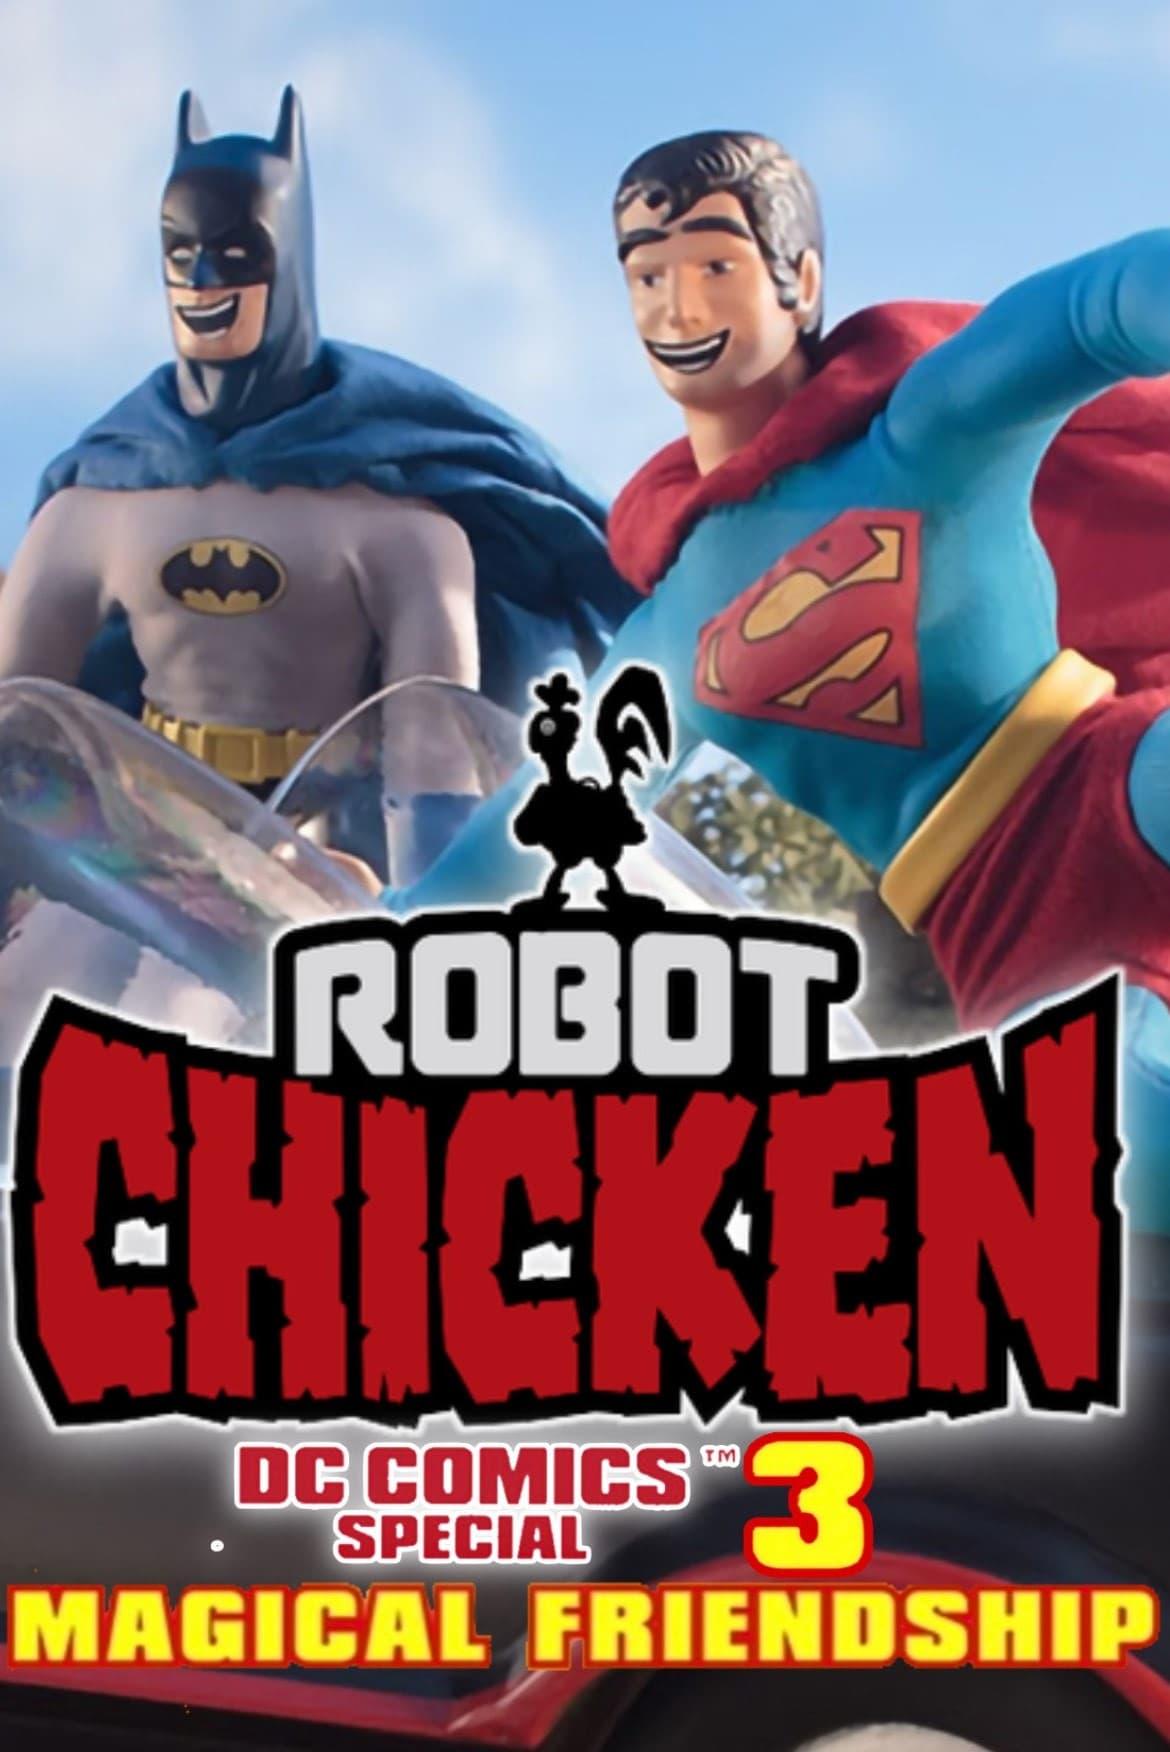 Robot Chicken DC Comics Special III: Magische Freundschaft poster